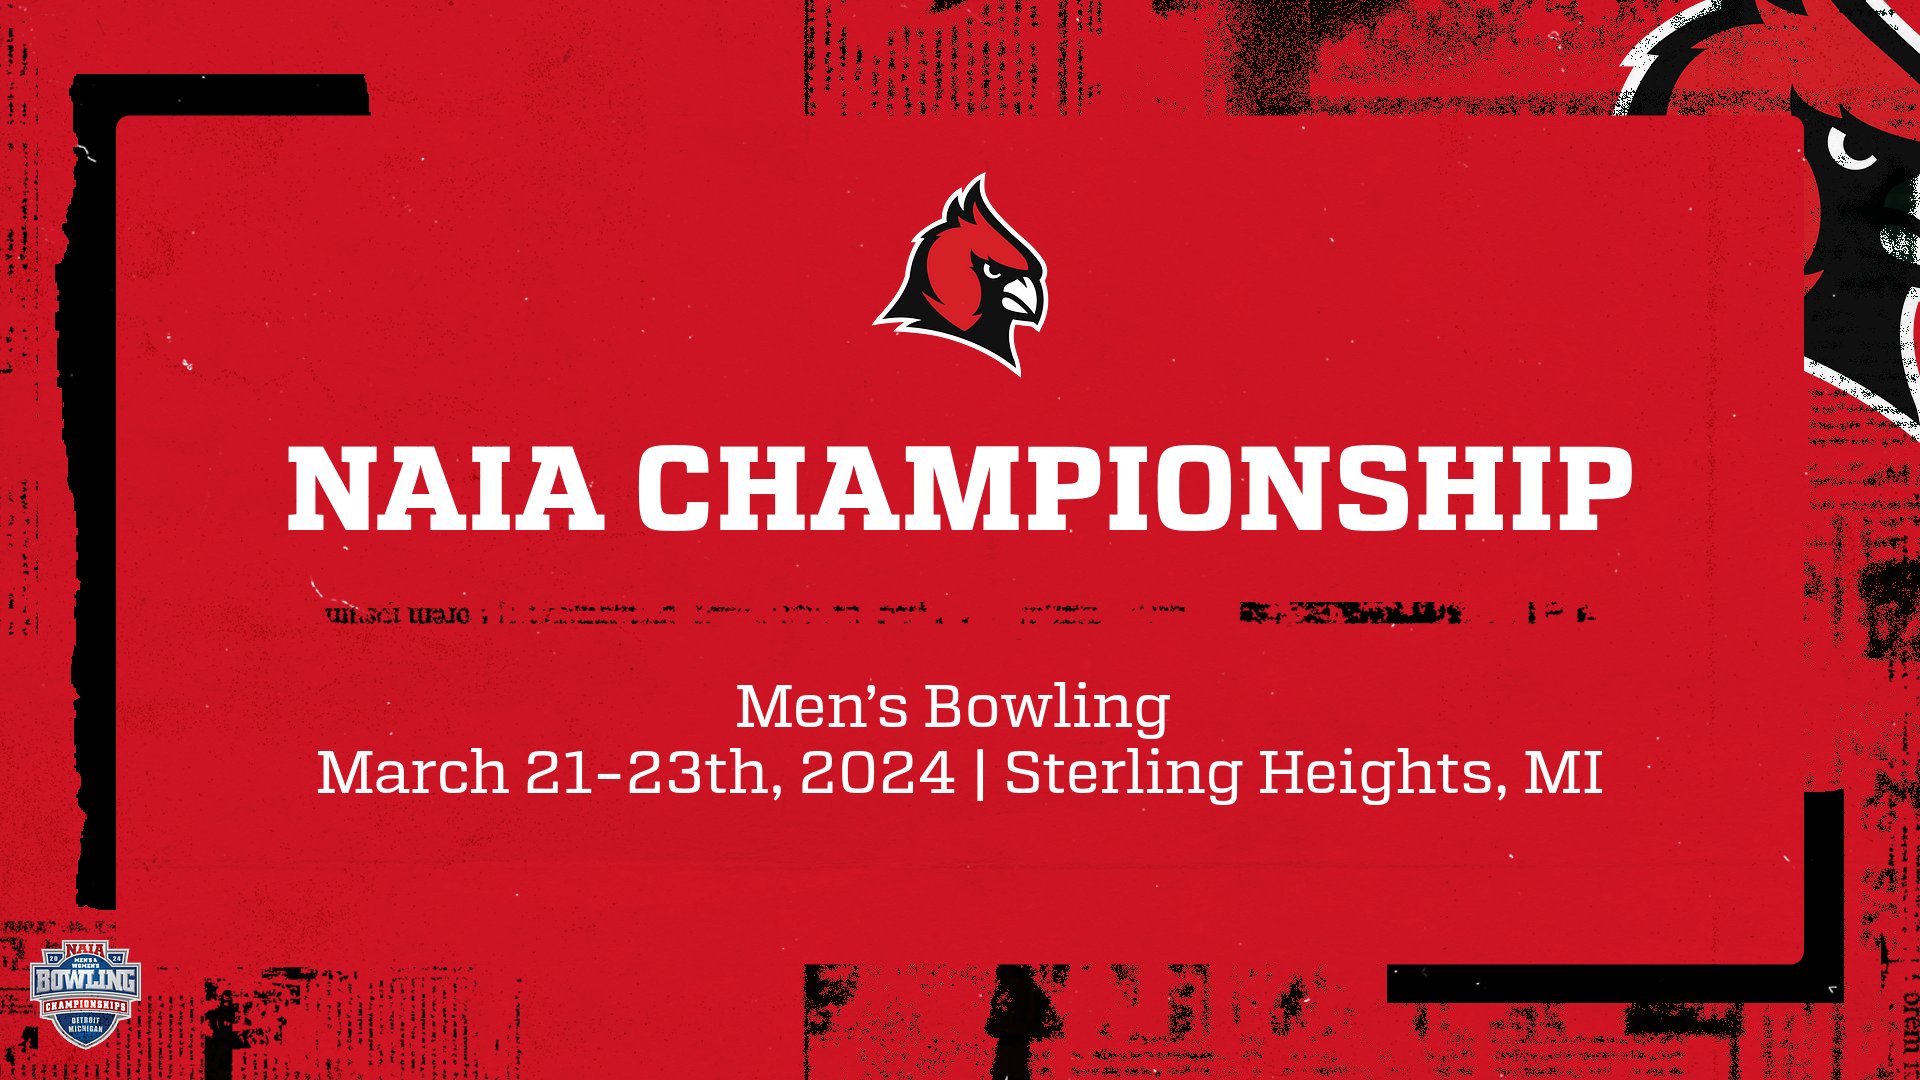 NAIA CHAMPIONSHIP PREVIEW: Men's Bowling set to compete at NAIA Championships